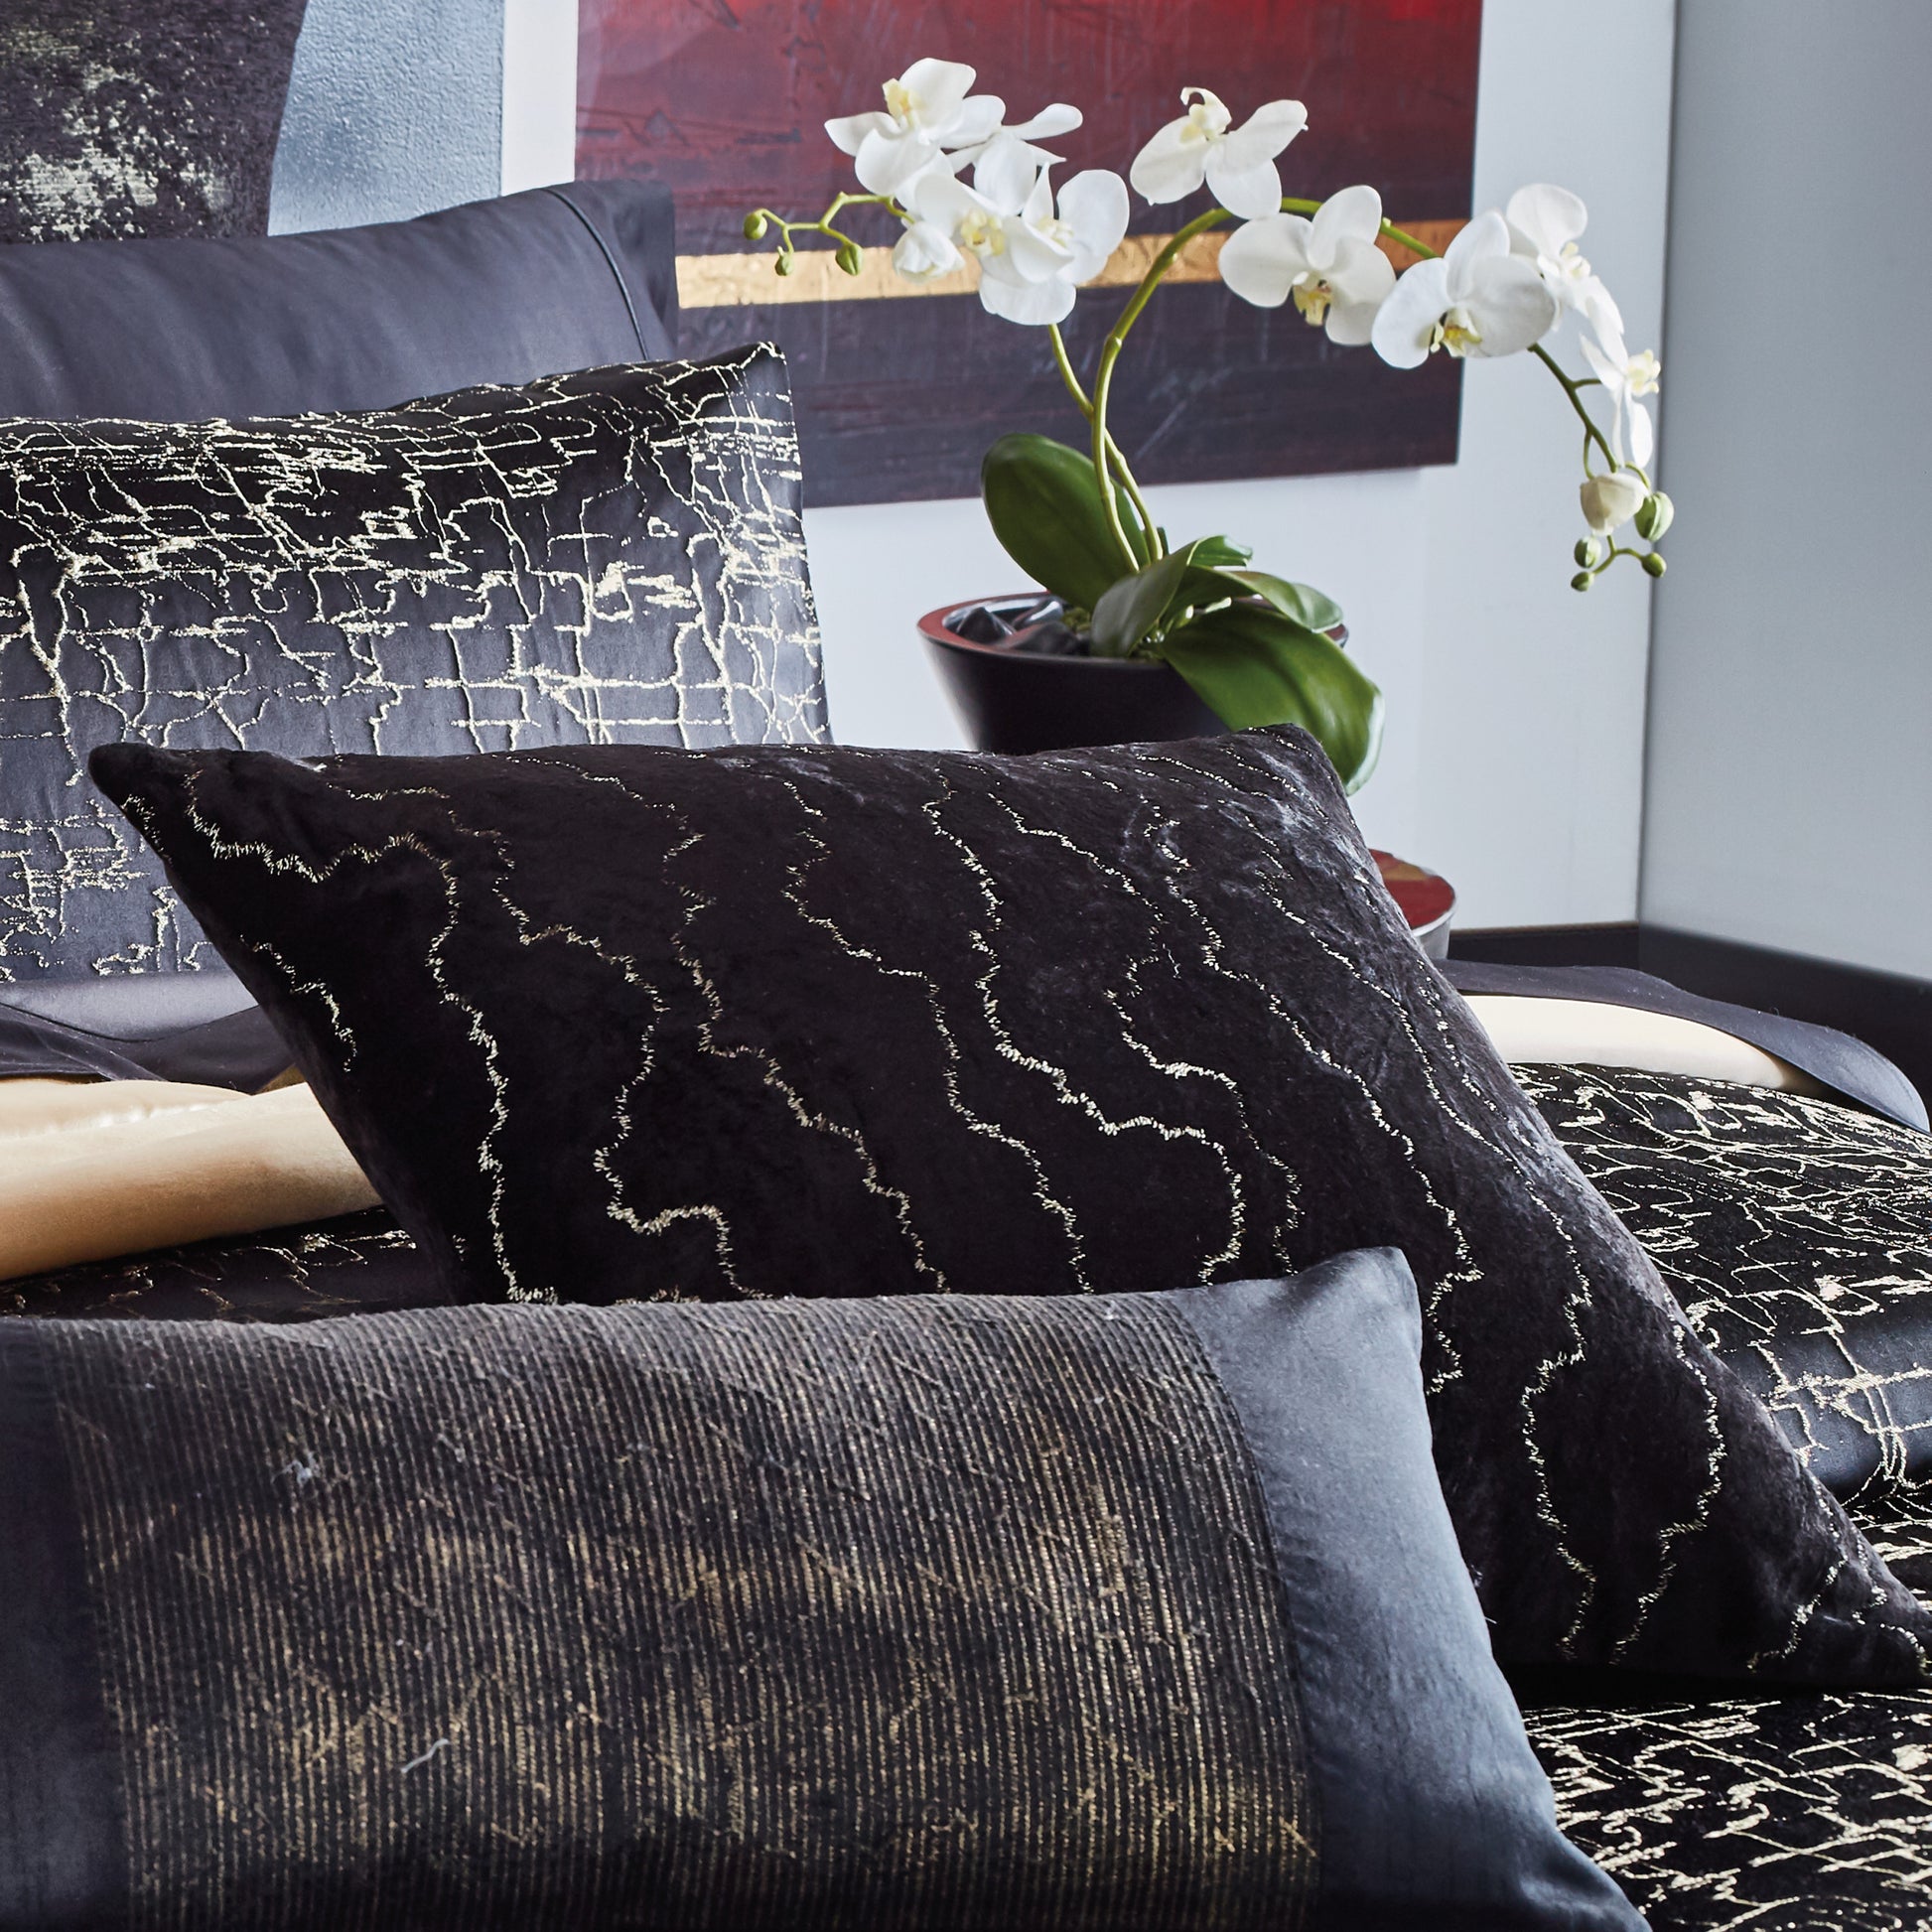 Donna Karan Black Onyx Bedding Collection Decorative Pillows